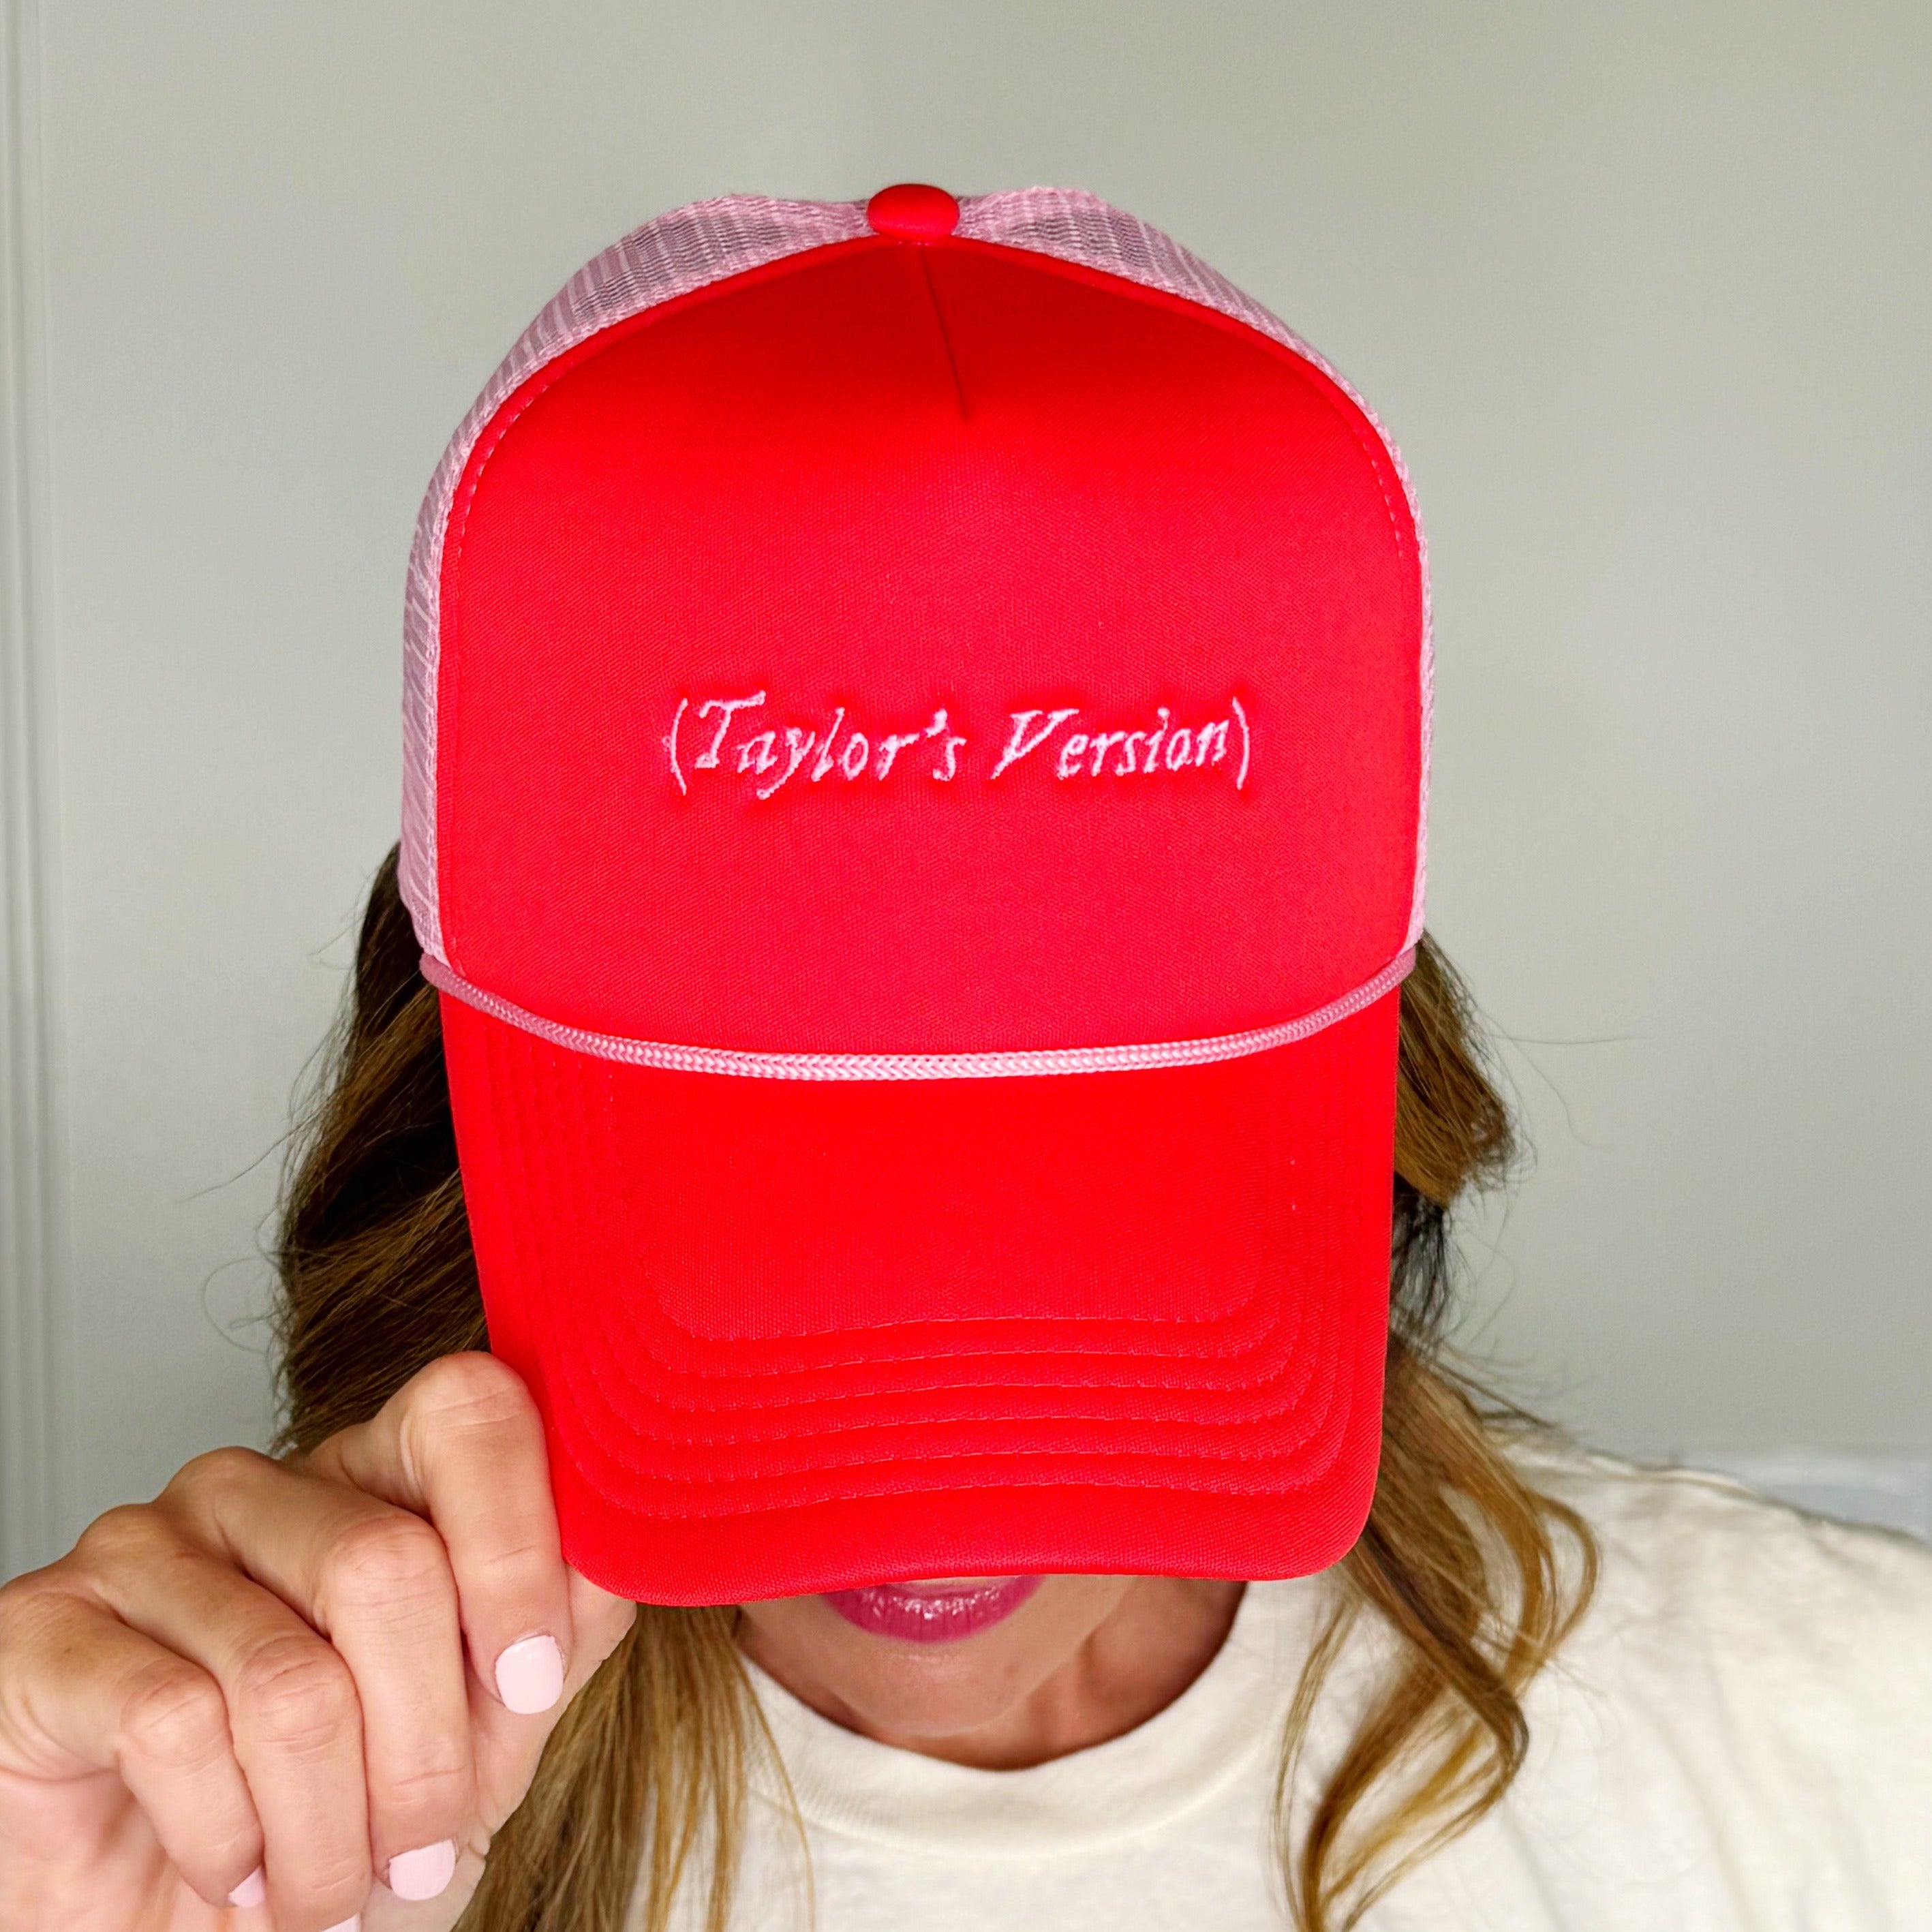 Taylor's Version Trucker Hat